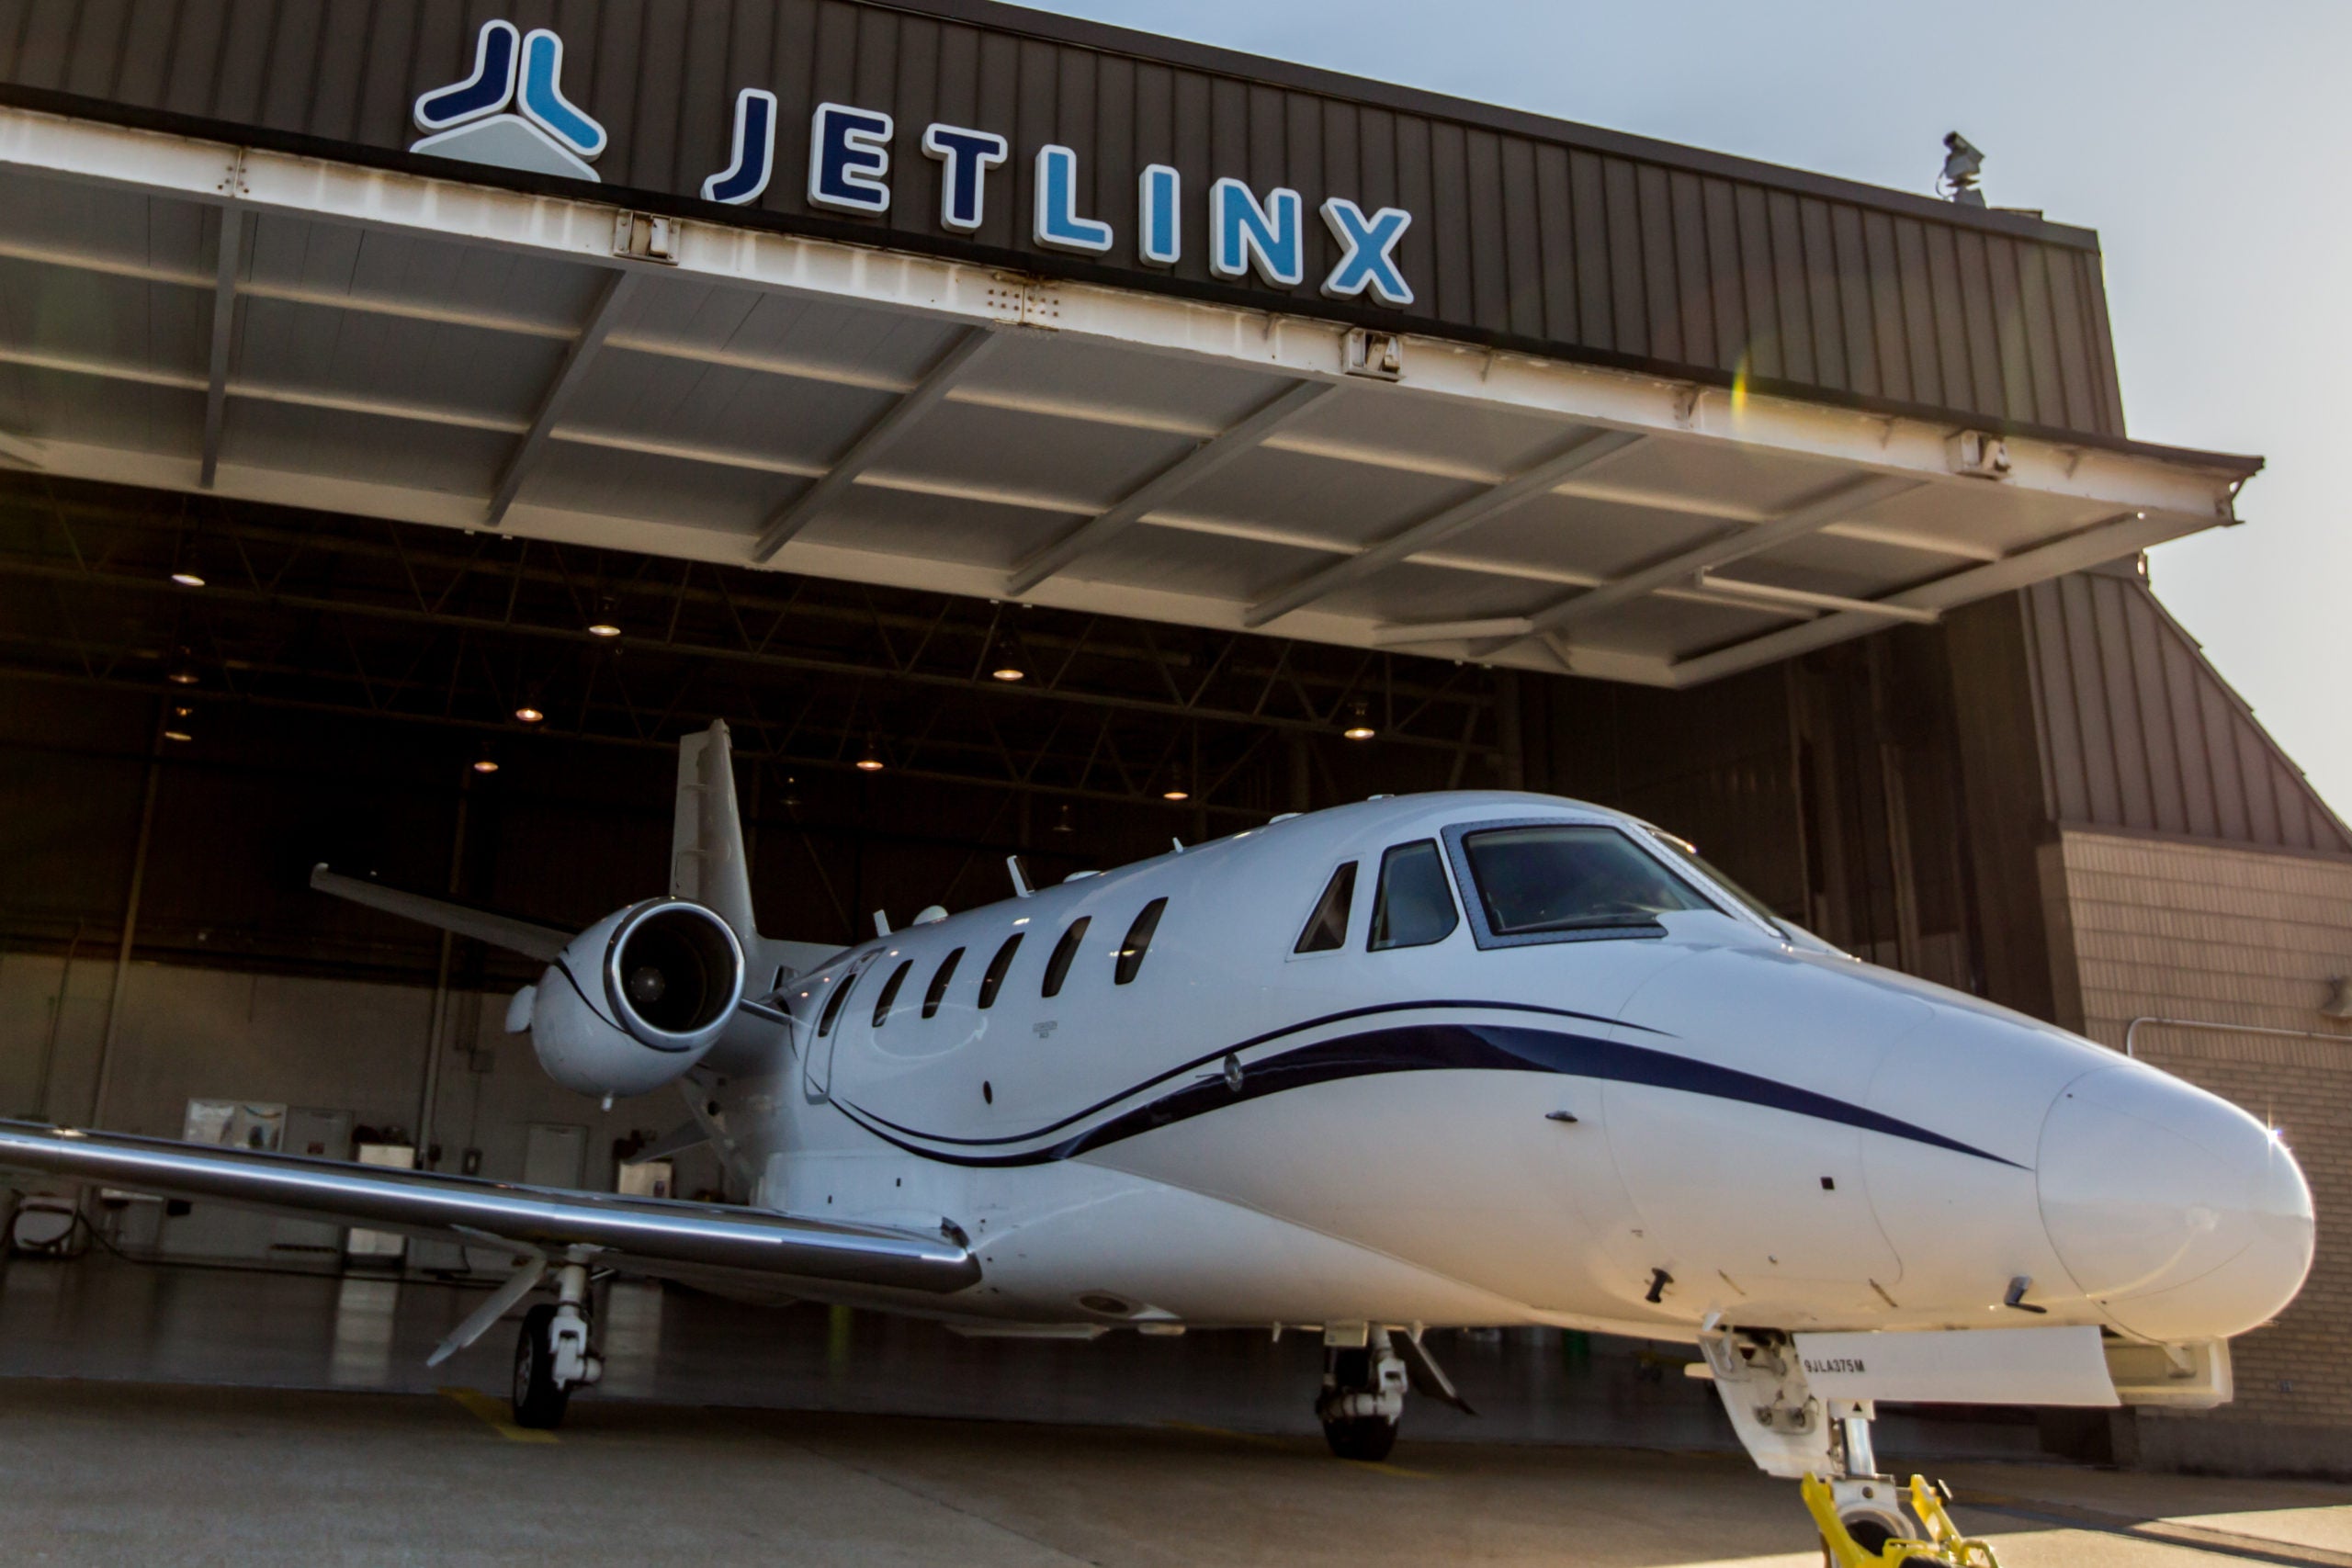 jetlinx company jet in hangar